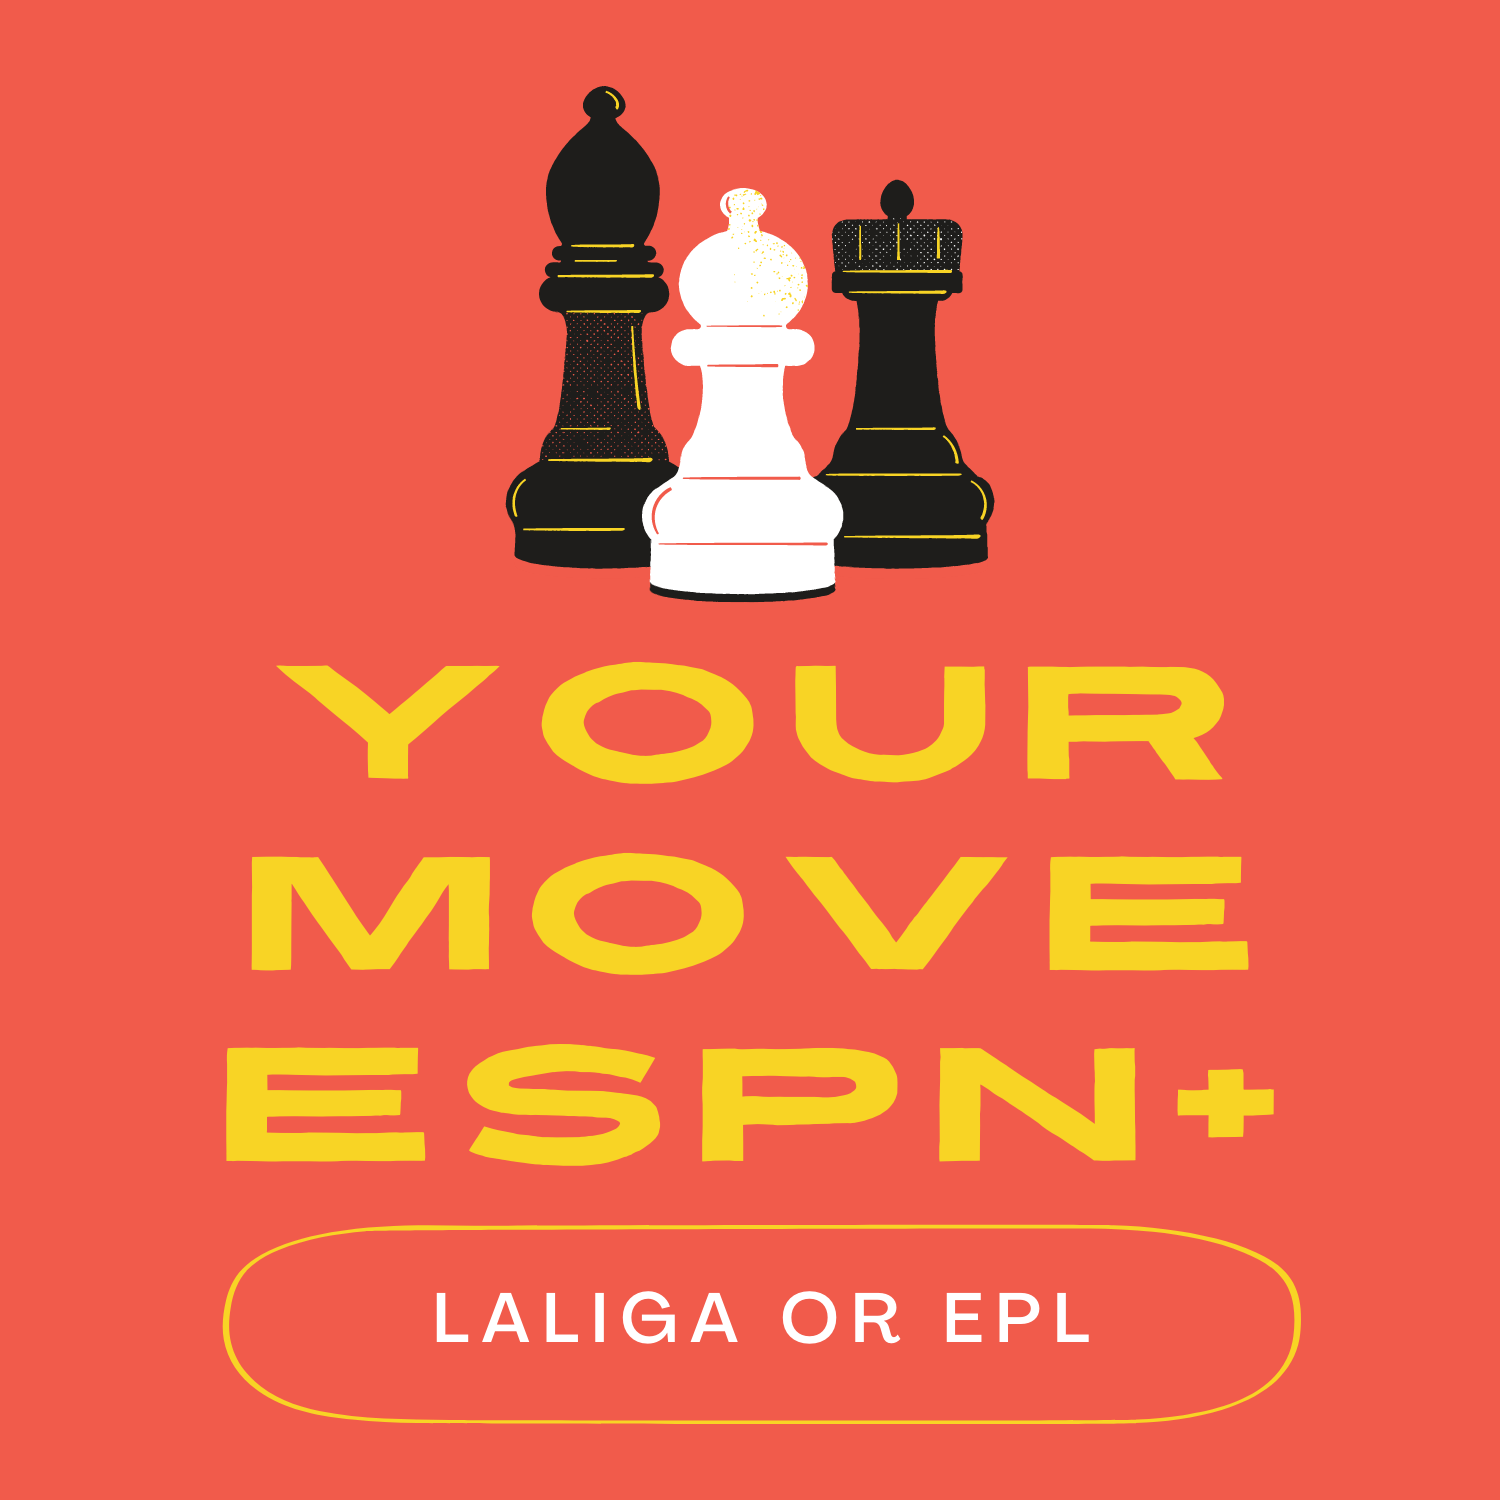 Your move ESPN+... LaLiga or Premier League?